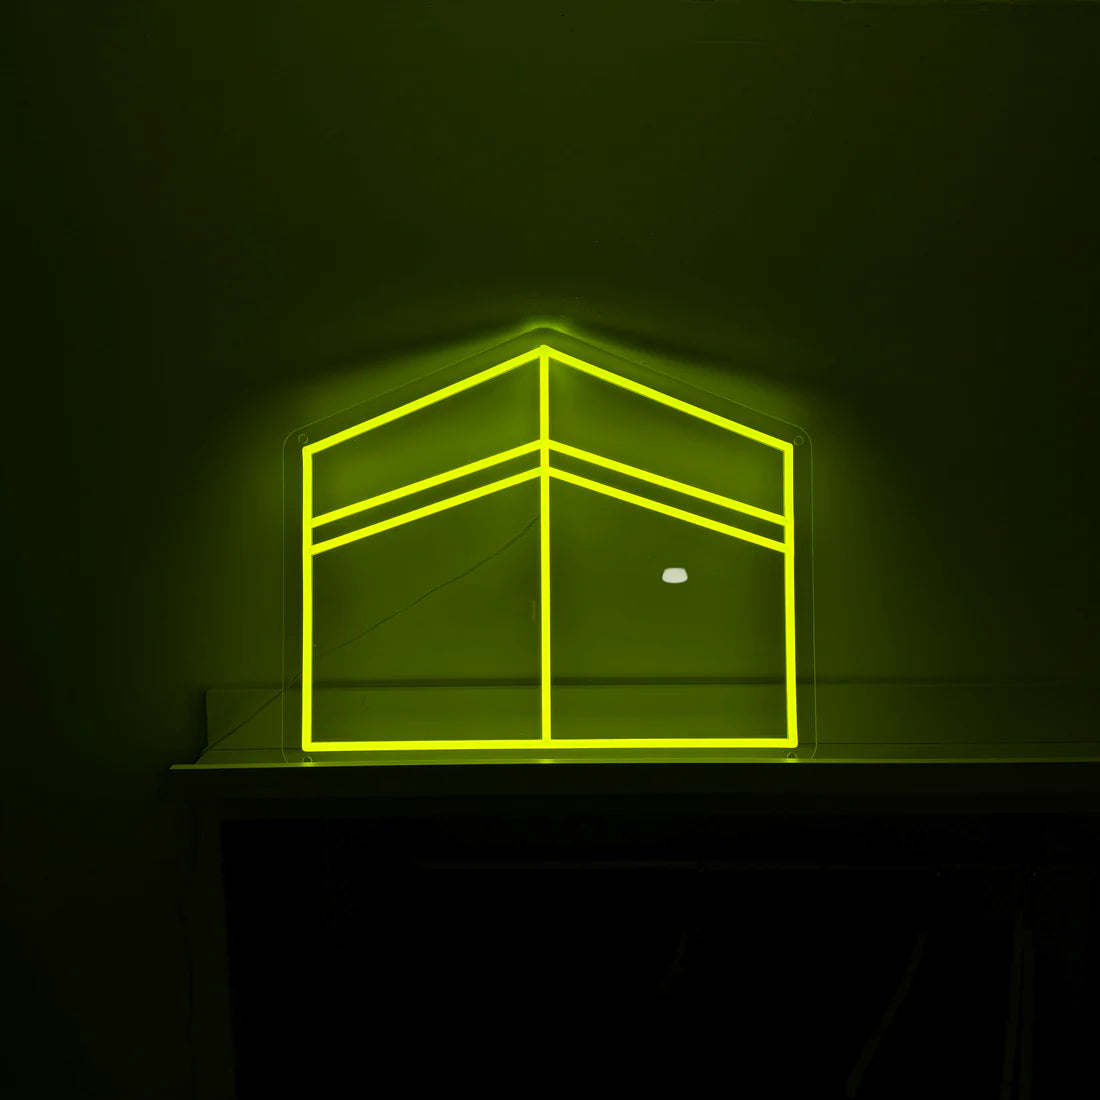 Kaabah Shaped Neon Light - Islamic Art UK